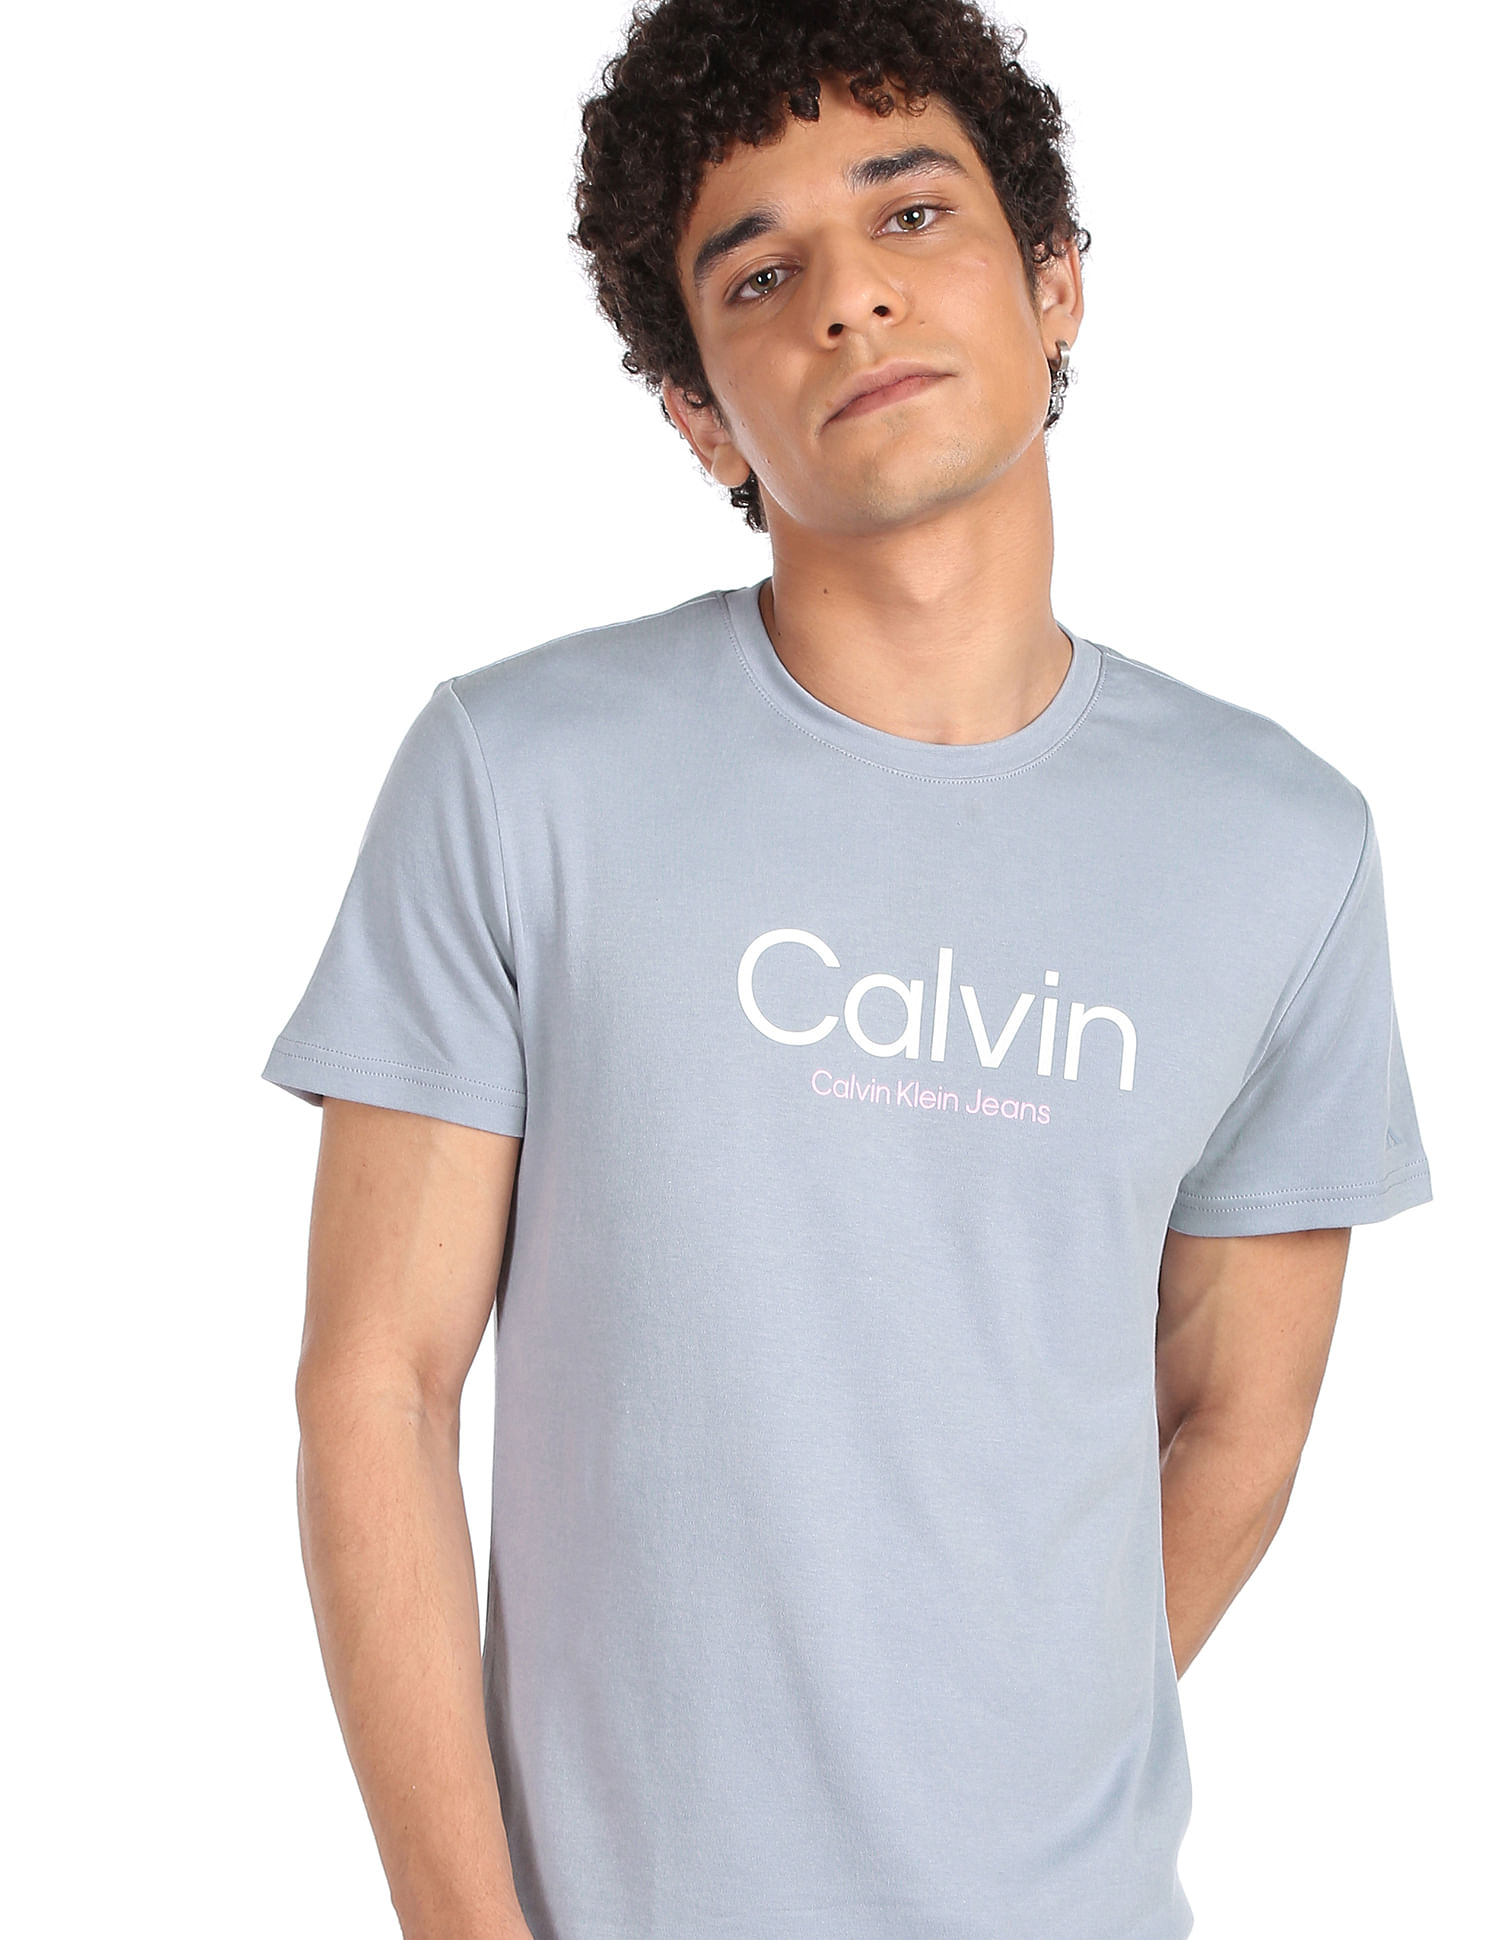 Calvin Klein Jeans T-shirt in neon blue/ white